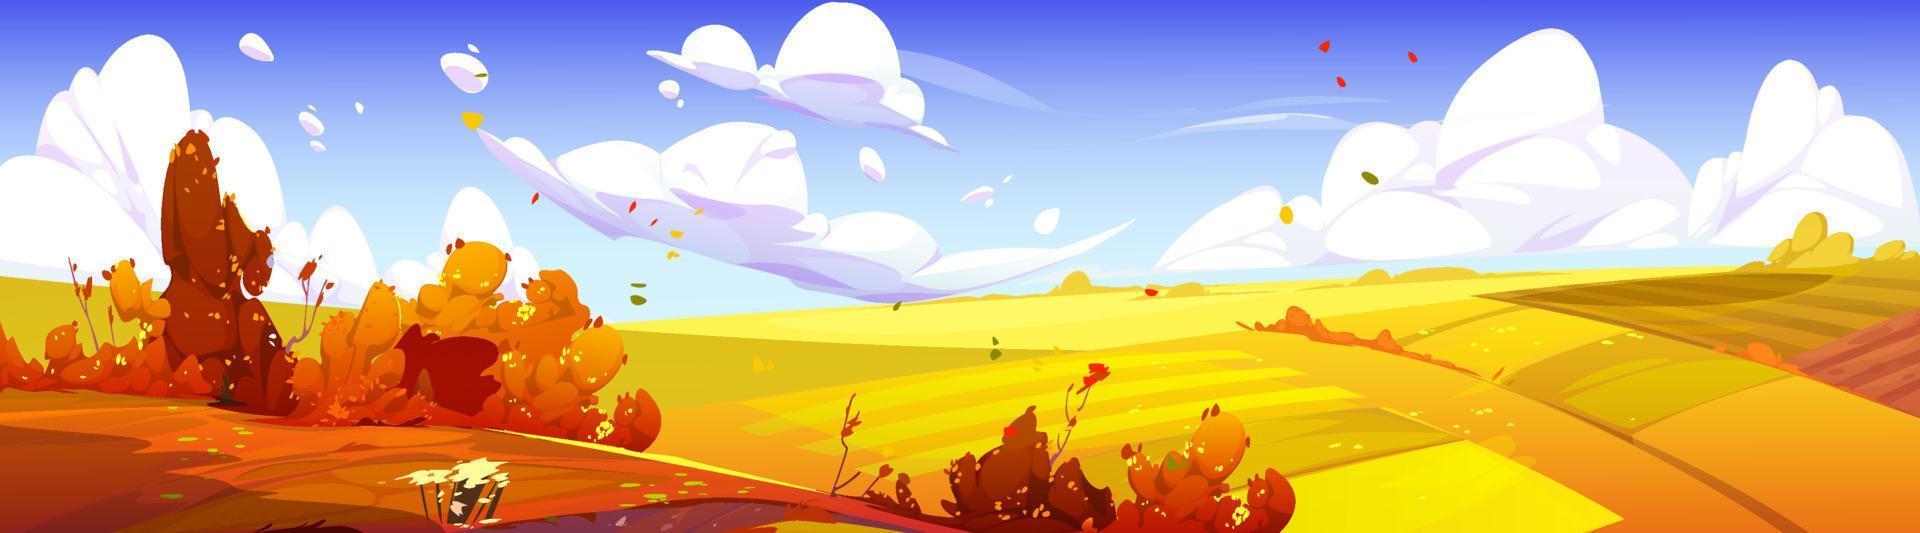 Autumn landscape with orange agriculture fields vector